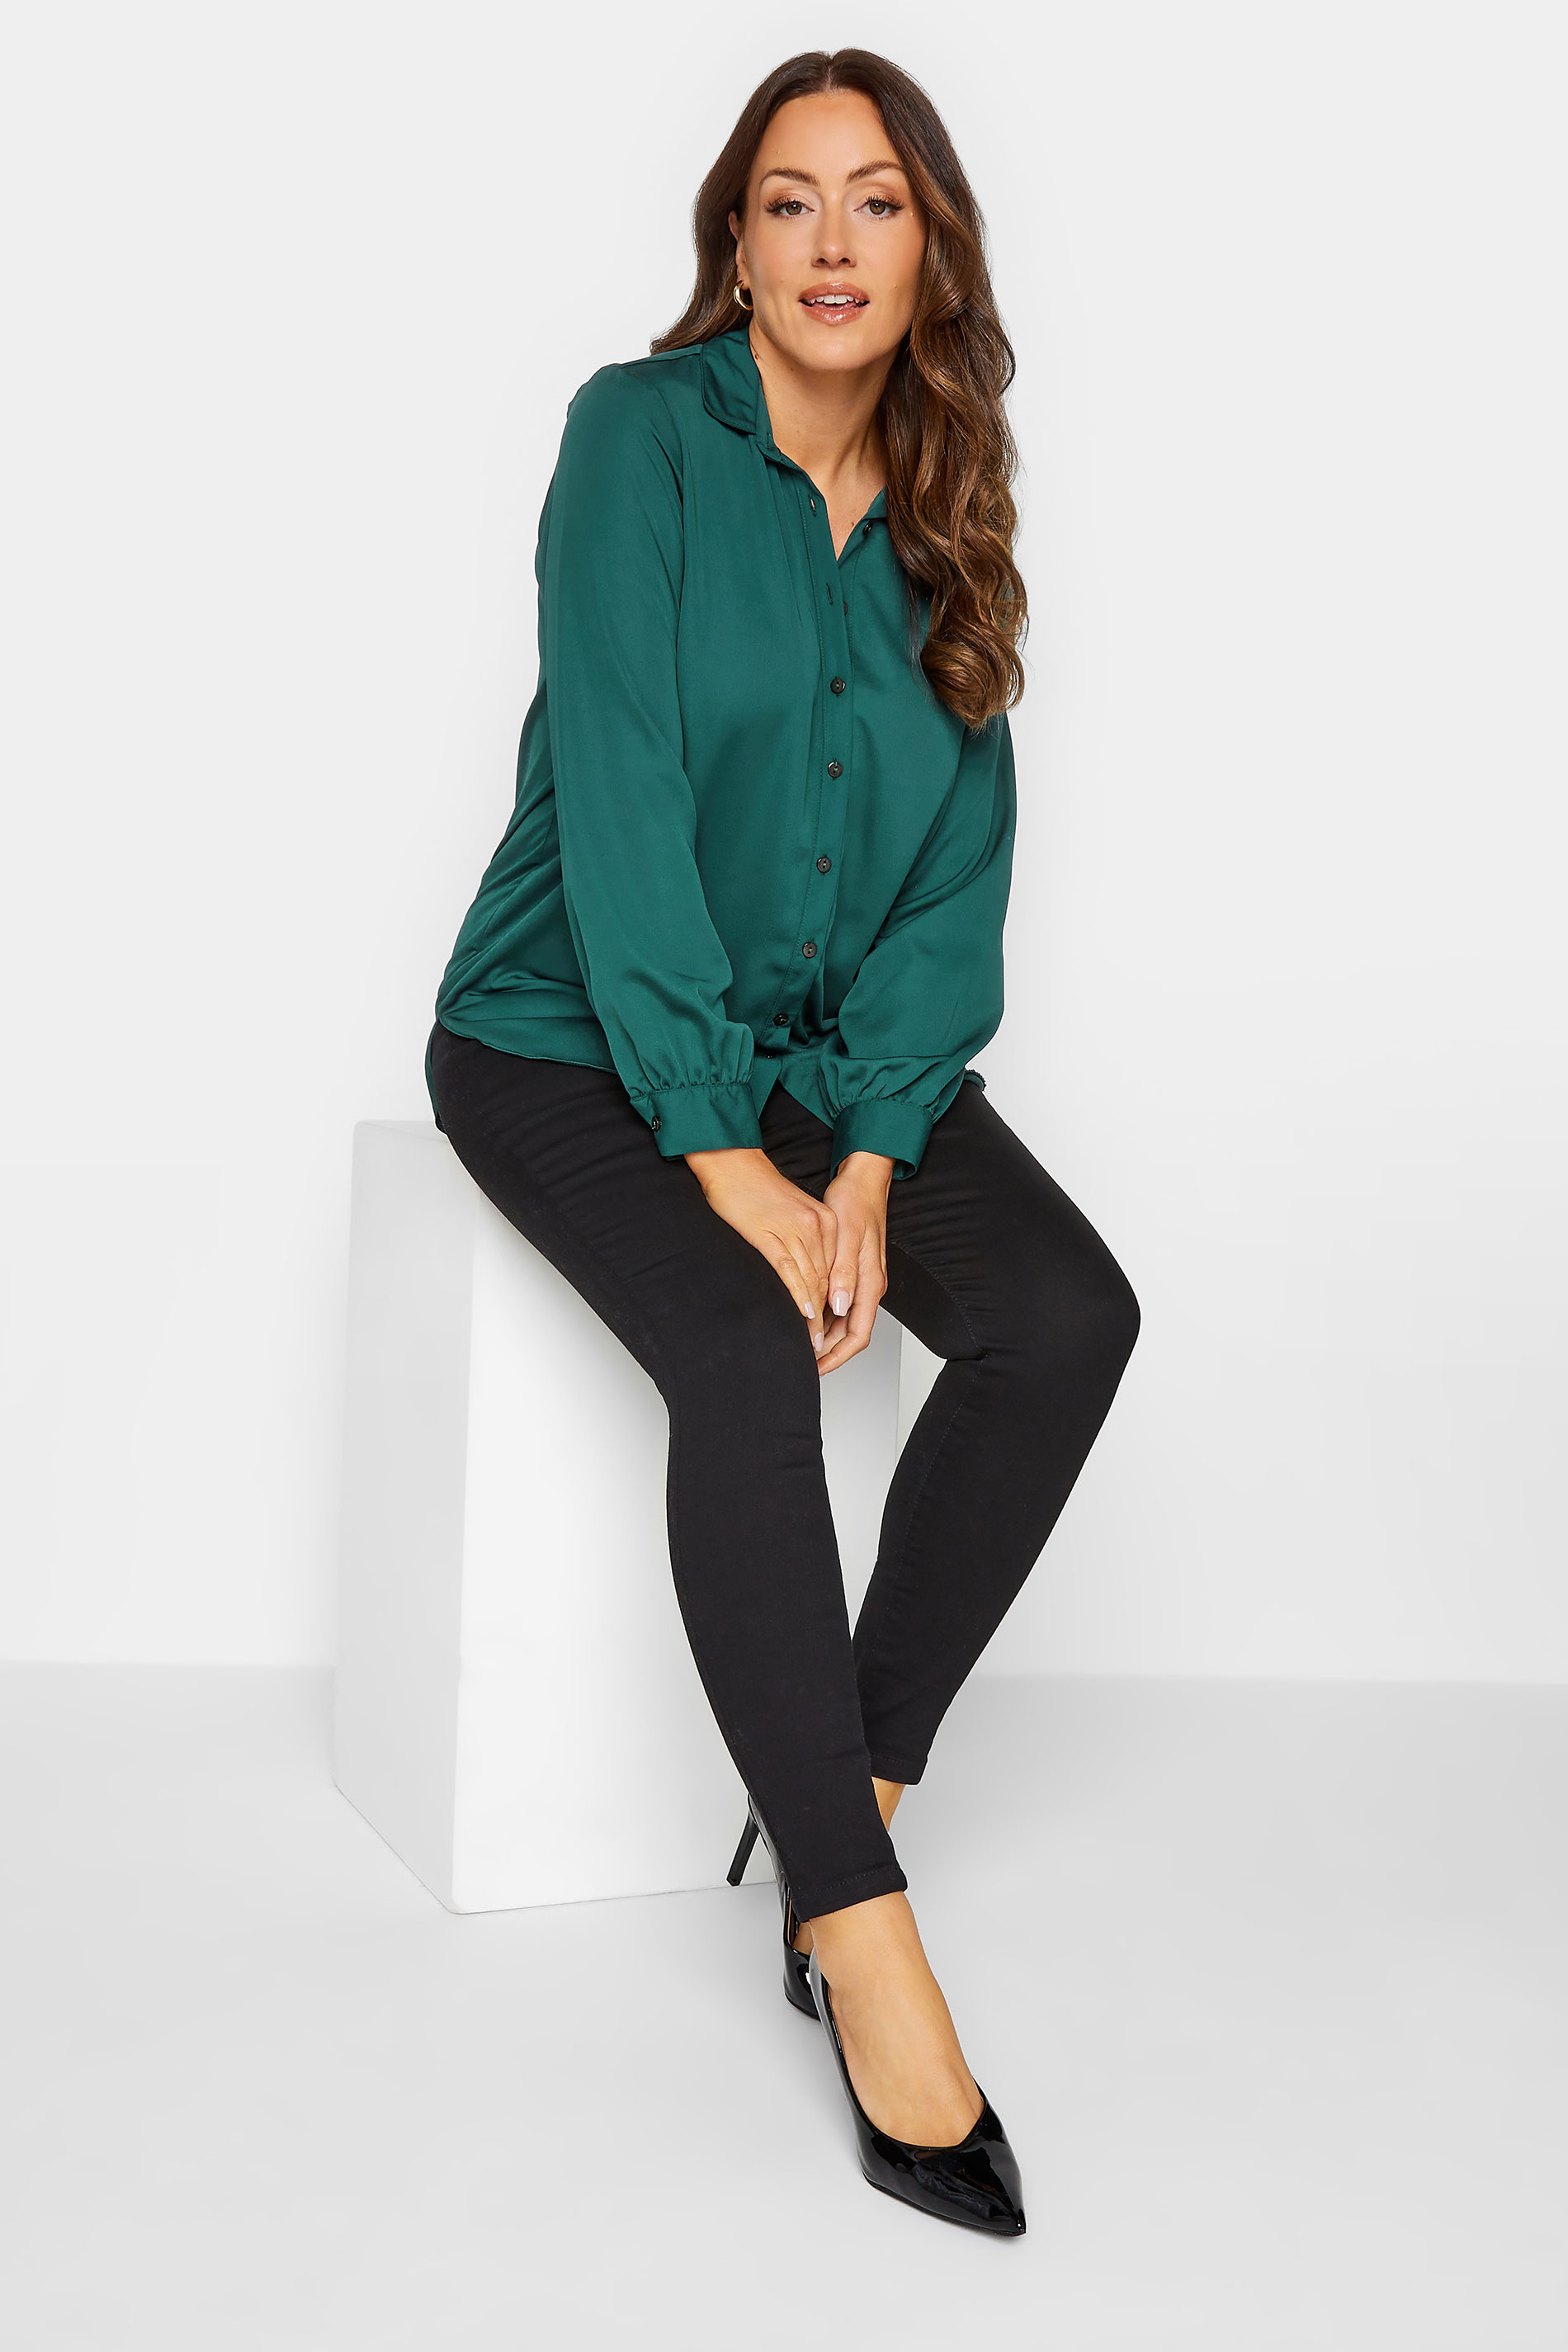 M&Co Green Button Through Shirt | M&Co 2